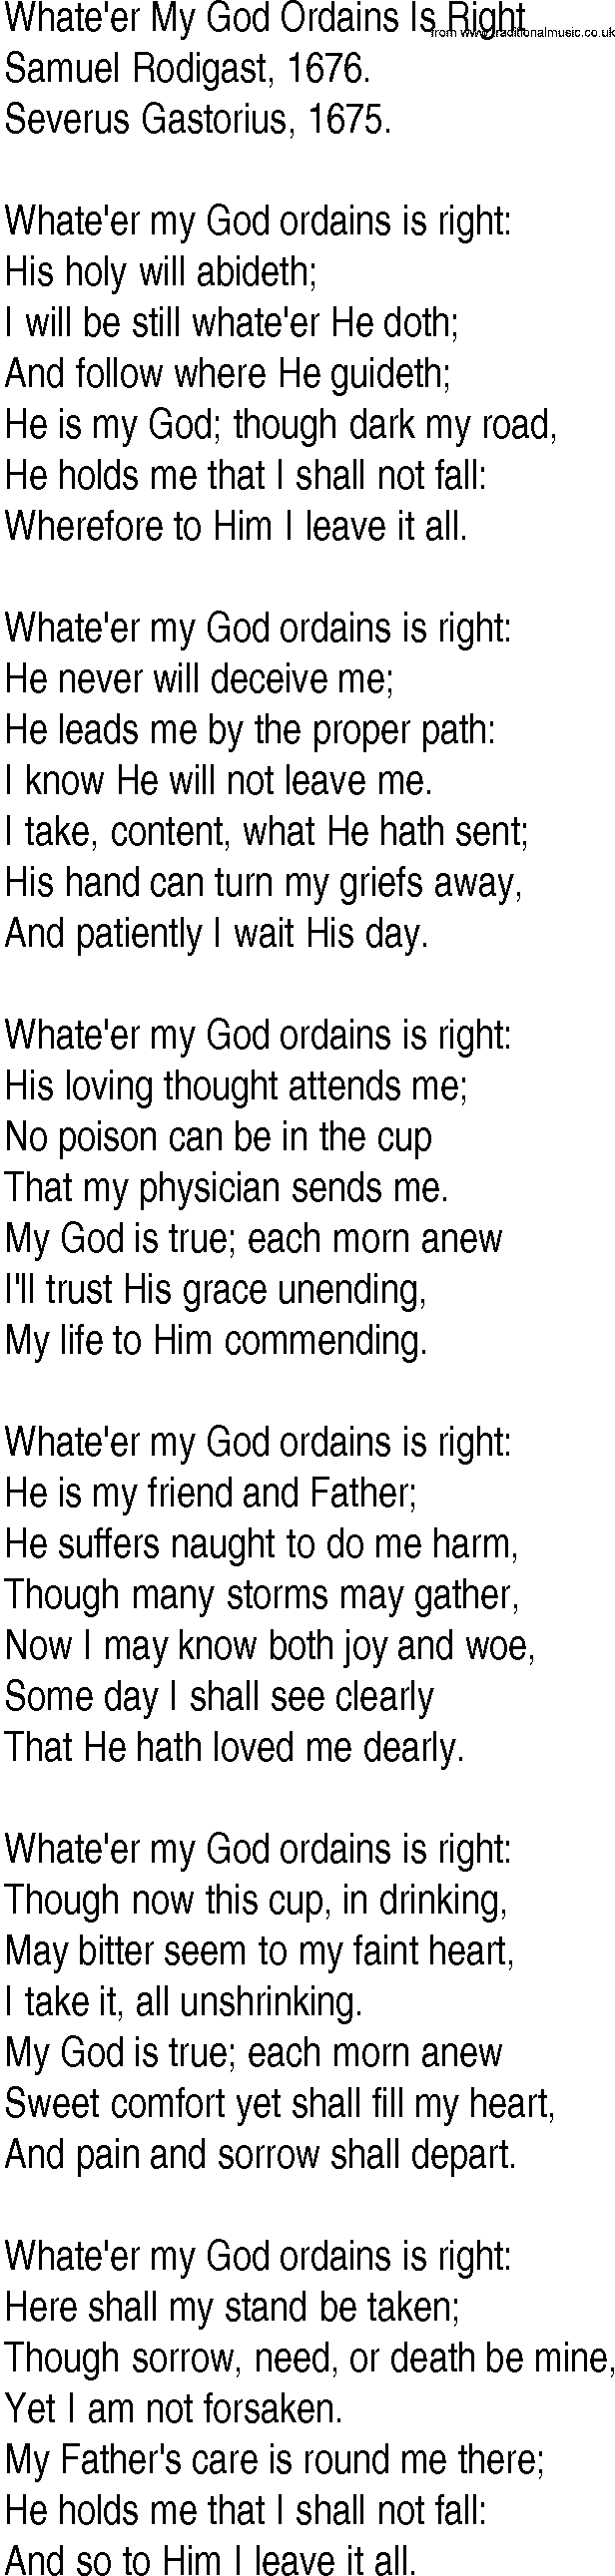 Hymn and Gospel Song: Whate'er My God Ordains Is Right by Samuel Rodigast lyrics